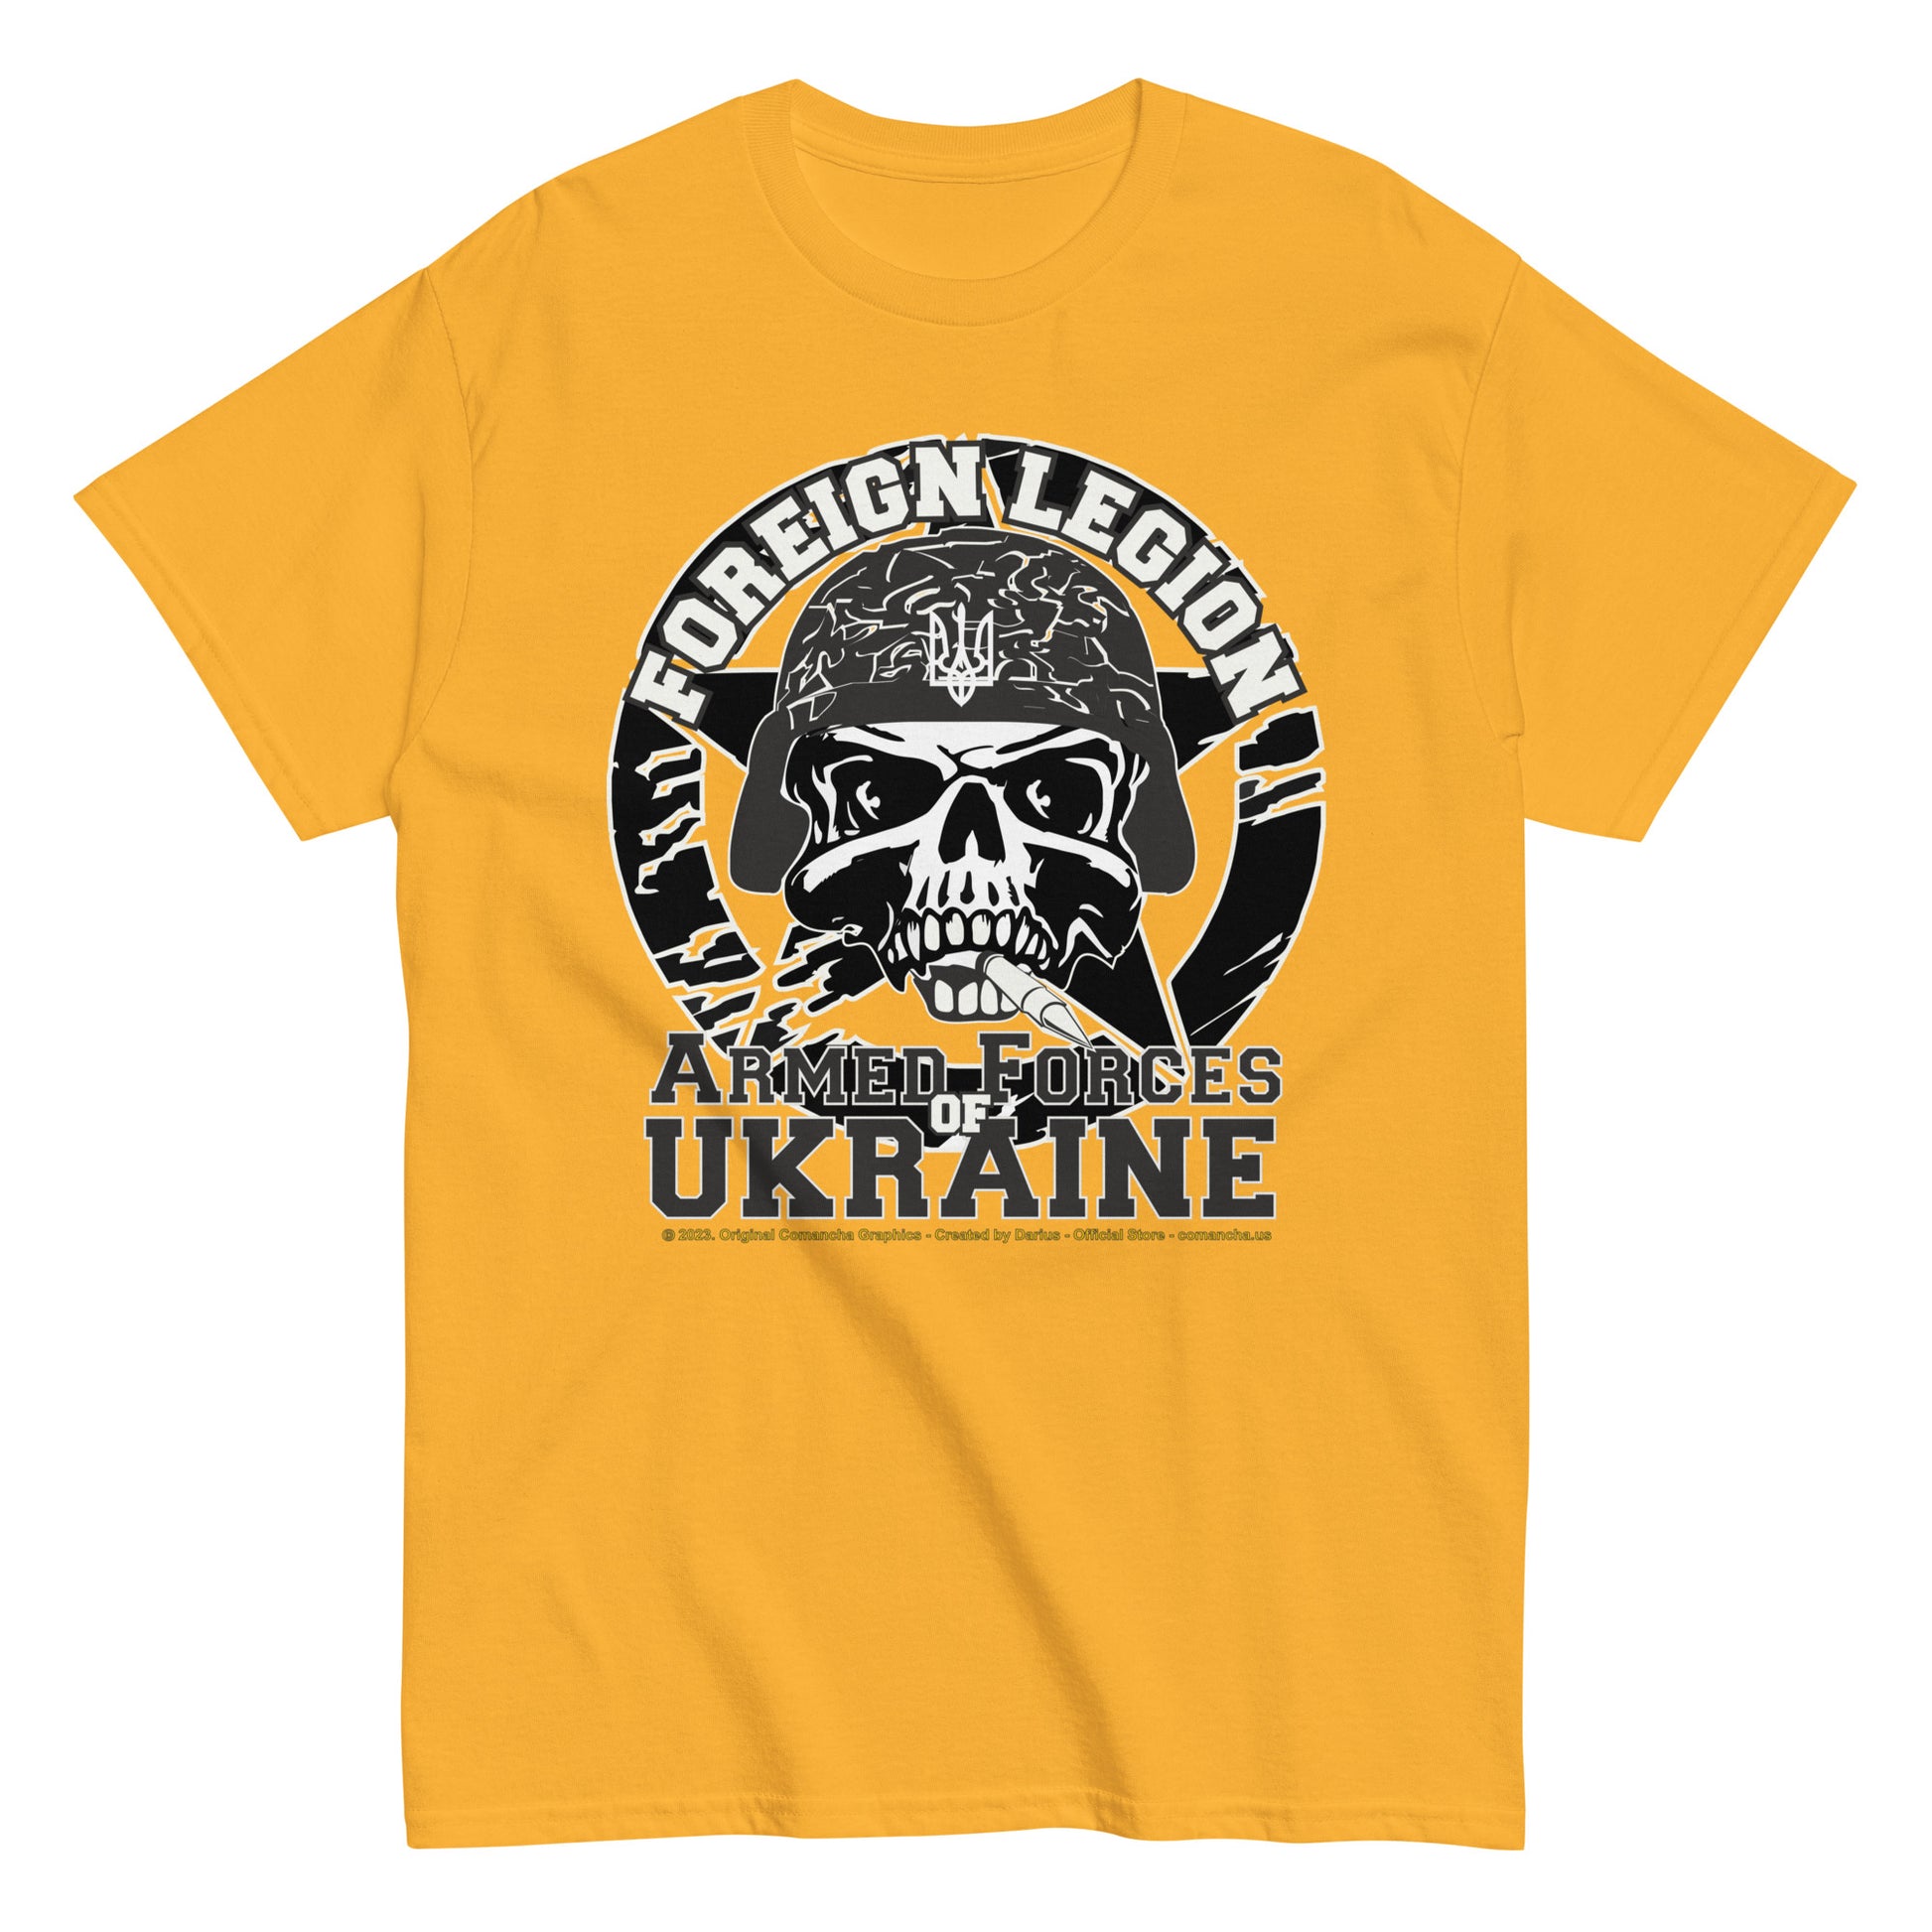 Foregin Legion T-Shirt, Save Ukraine, Comancha T-shirt,